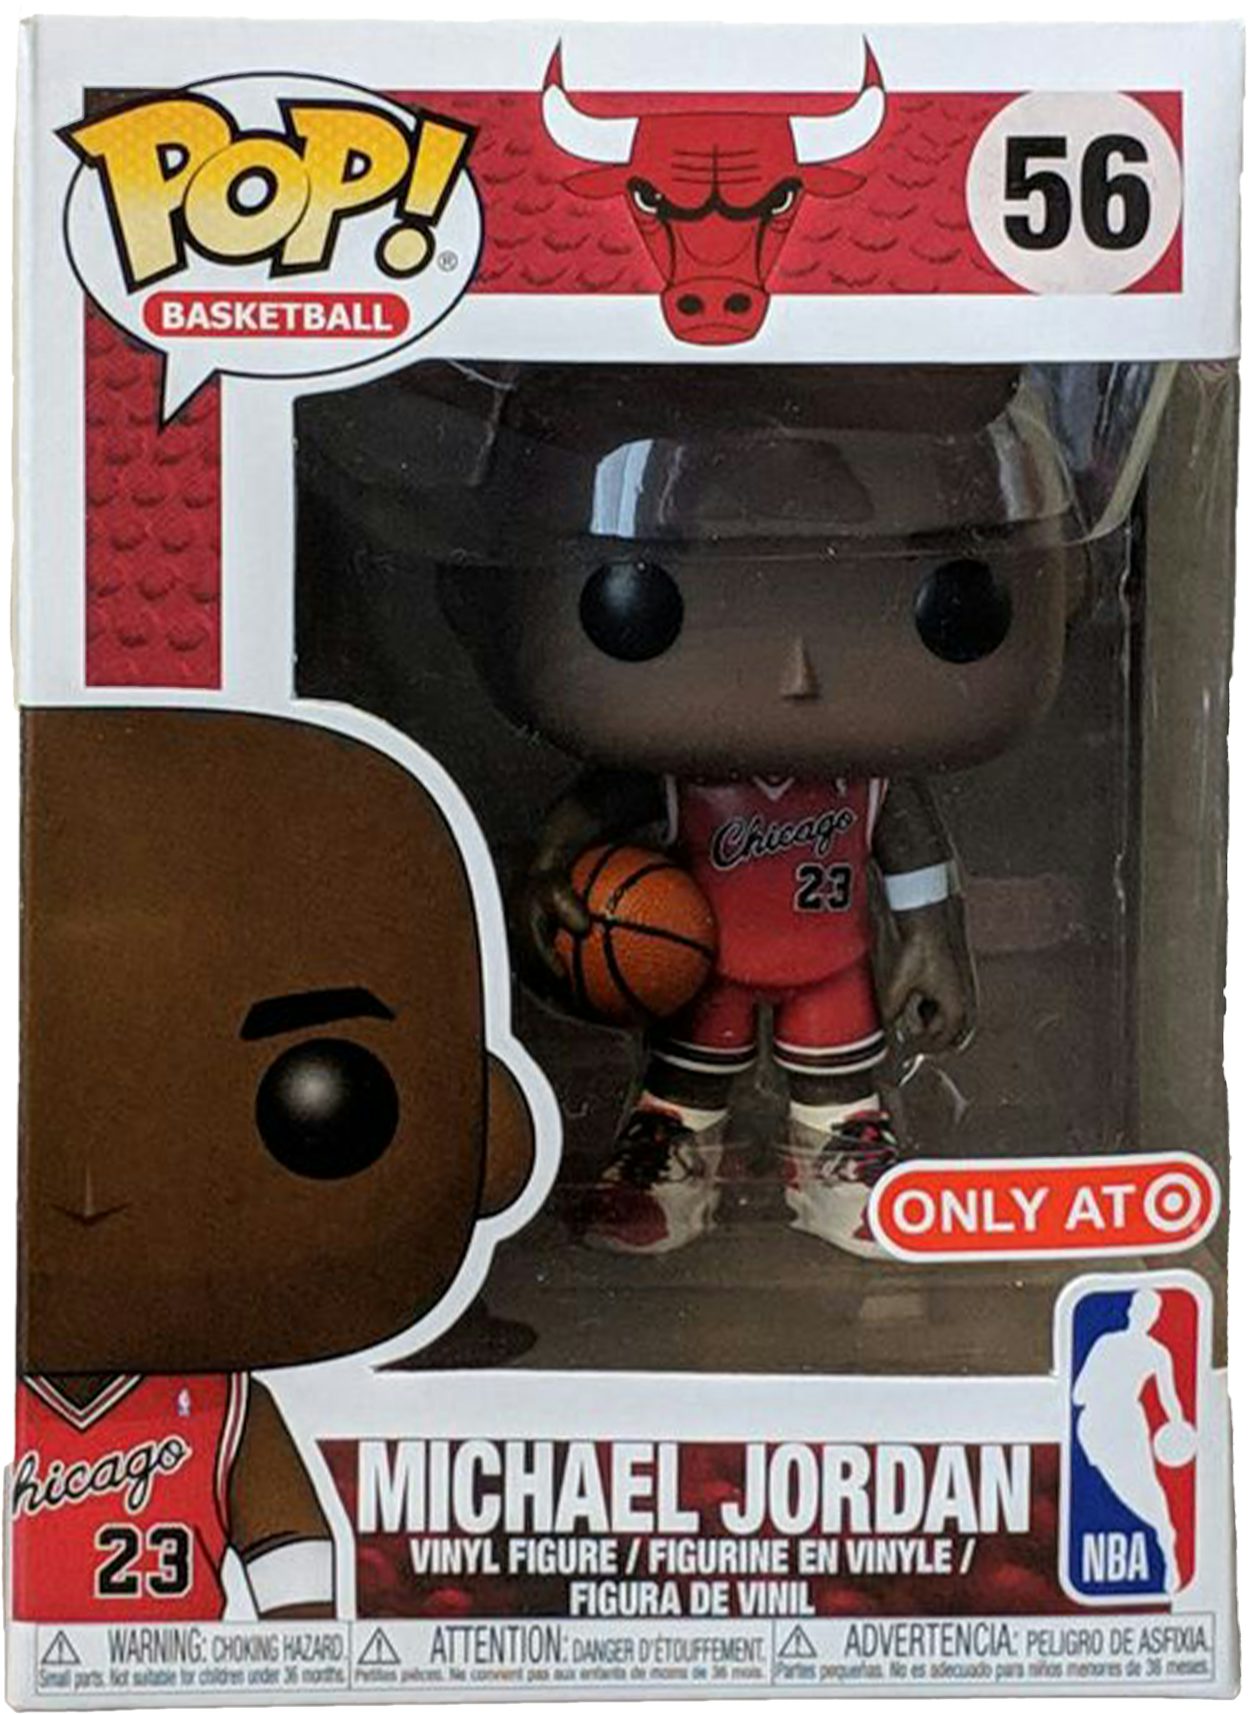 Funko Pop! Basketball Chicago Bulls Michael Jordan (White Warmup) Target  Con Exclusive Figure #84 - US